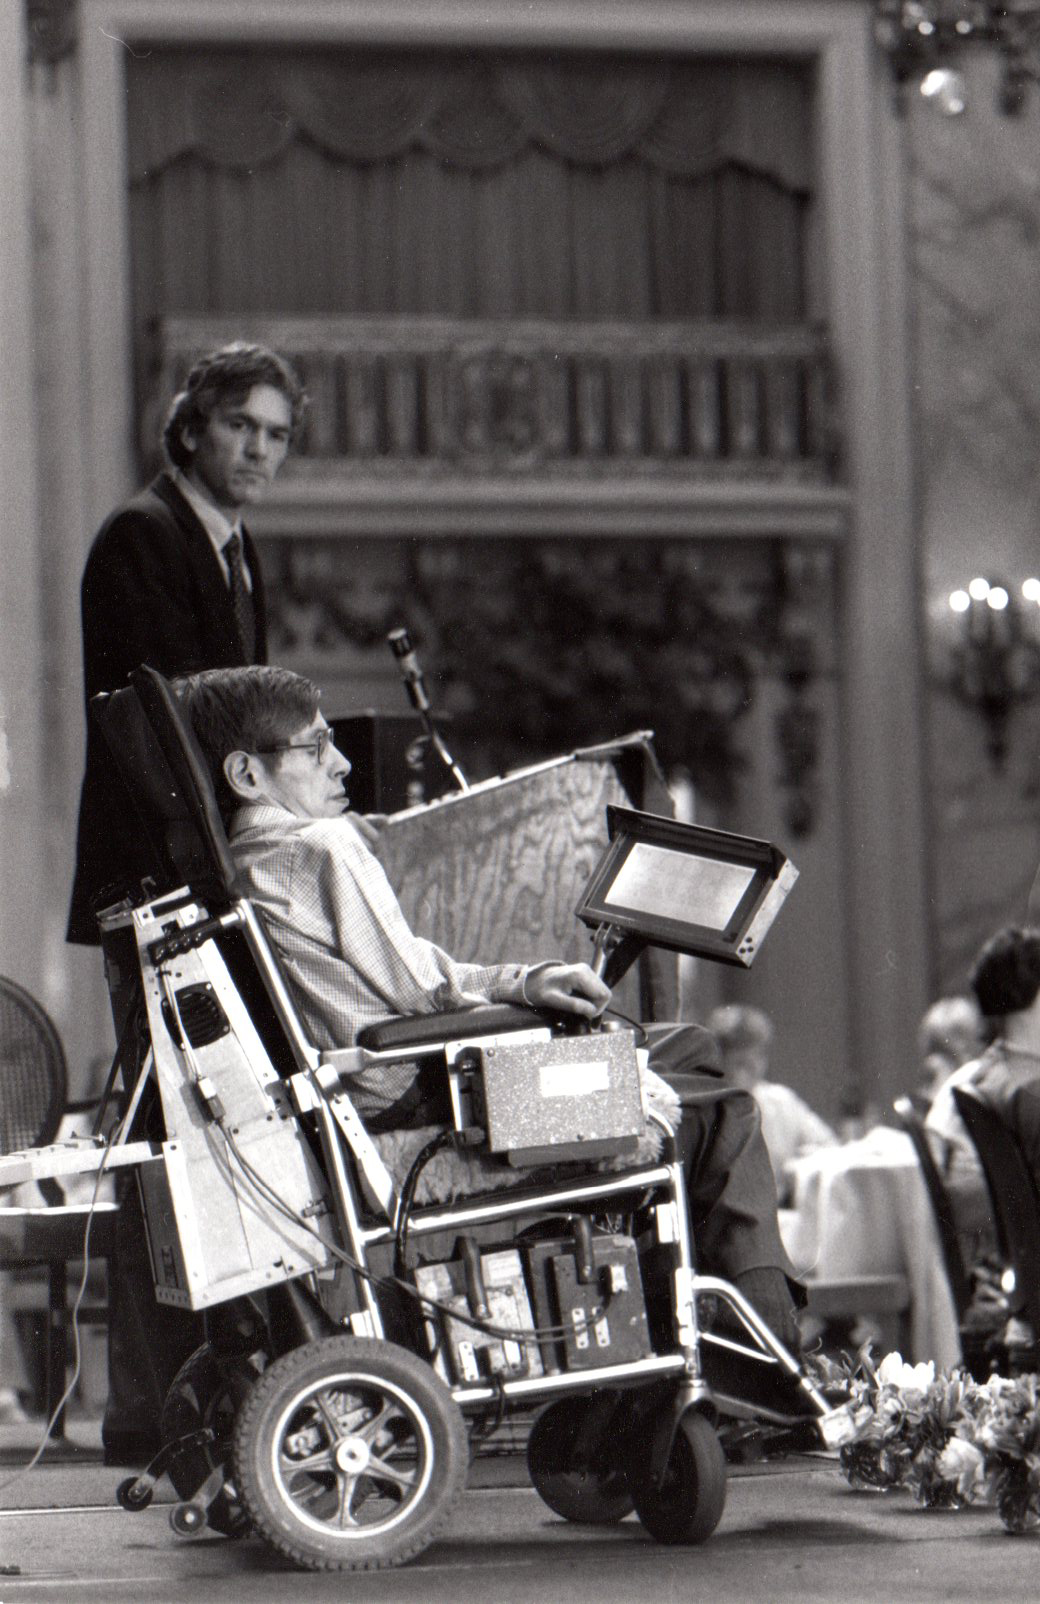 Stephen Hawking v San Franciscu na kongresu o ALS v polovině 80. let 20. století. Kredit: Wikipedia, Flickr https://www.flickr.com/photos/wwworks/3728608454/ Volné dílo, CCA 2.0 generic.